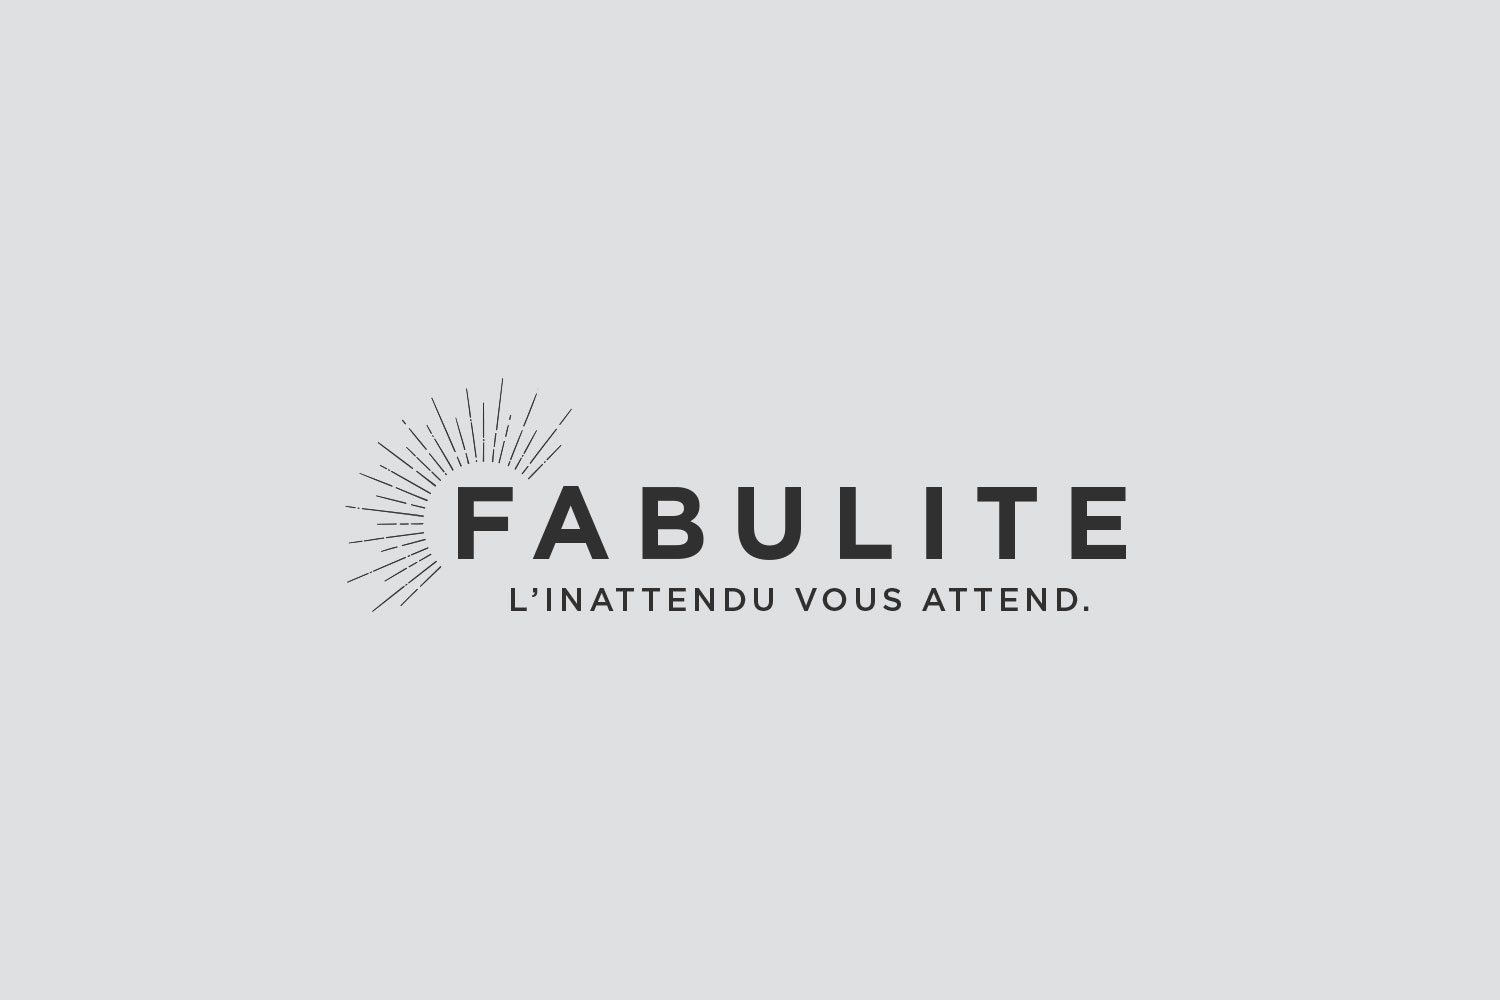 fabulite_caroussel_1